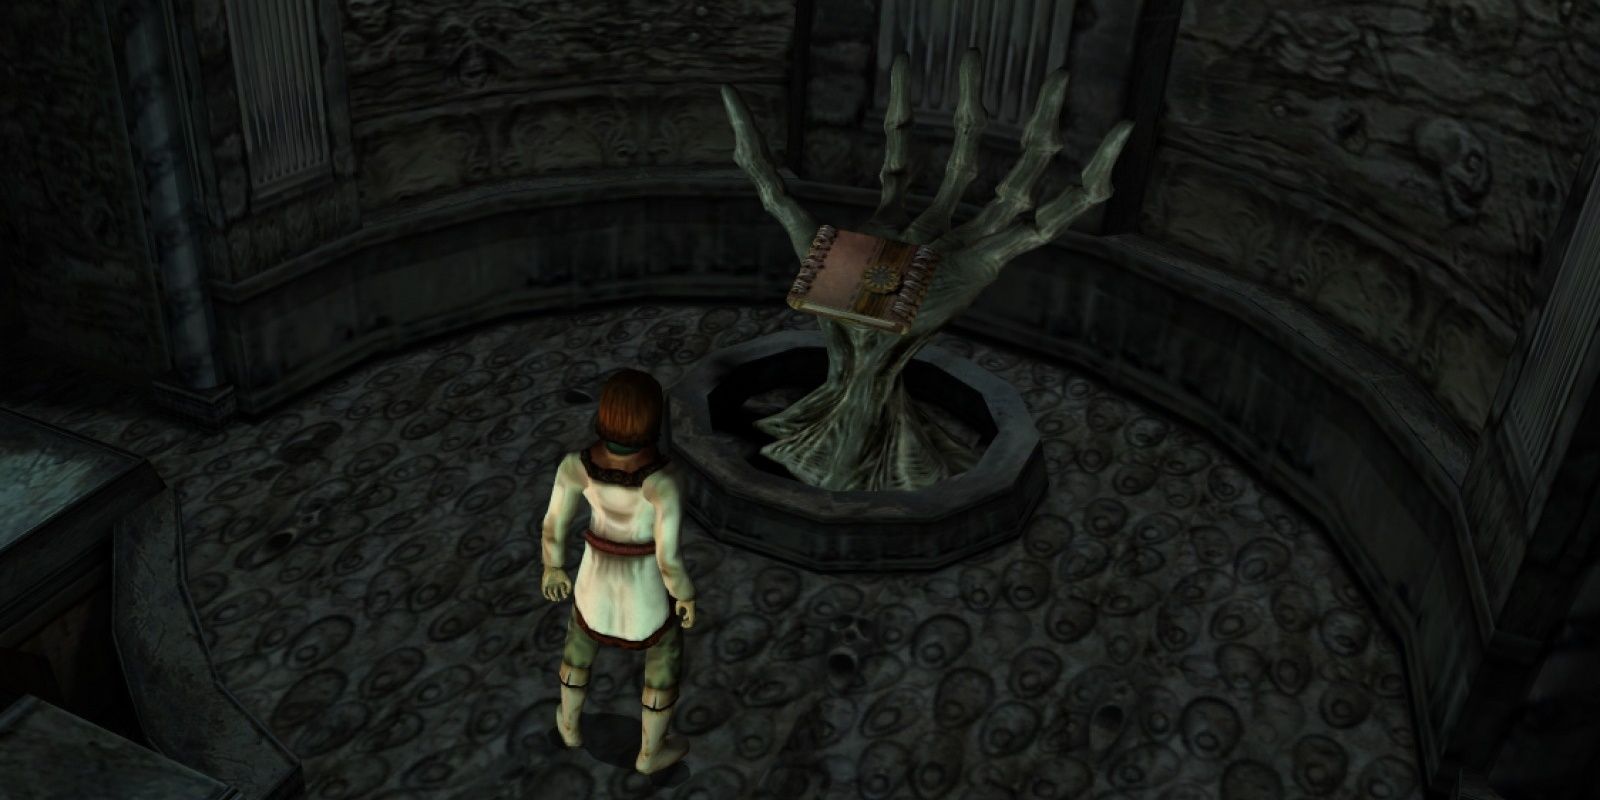 A screenshot showing gameplay in Eternal Darkness: Sanity's Requiem